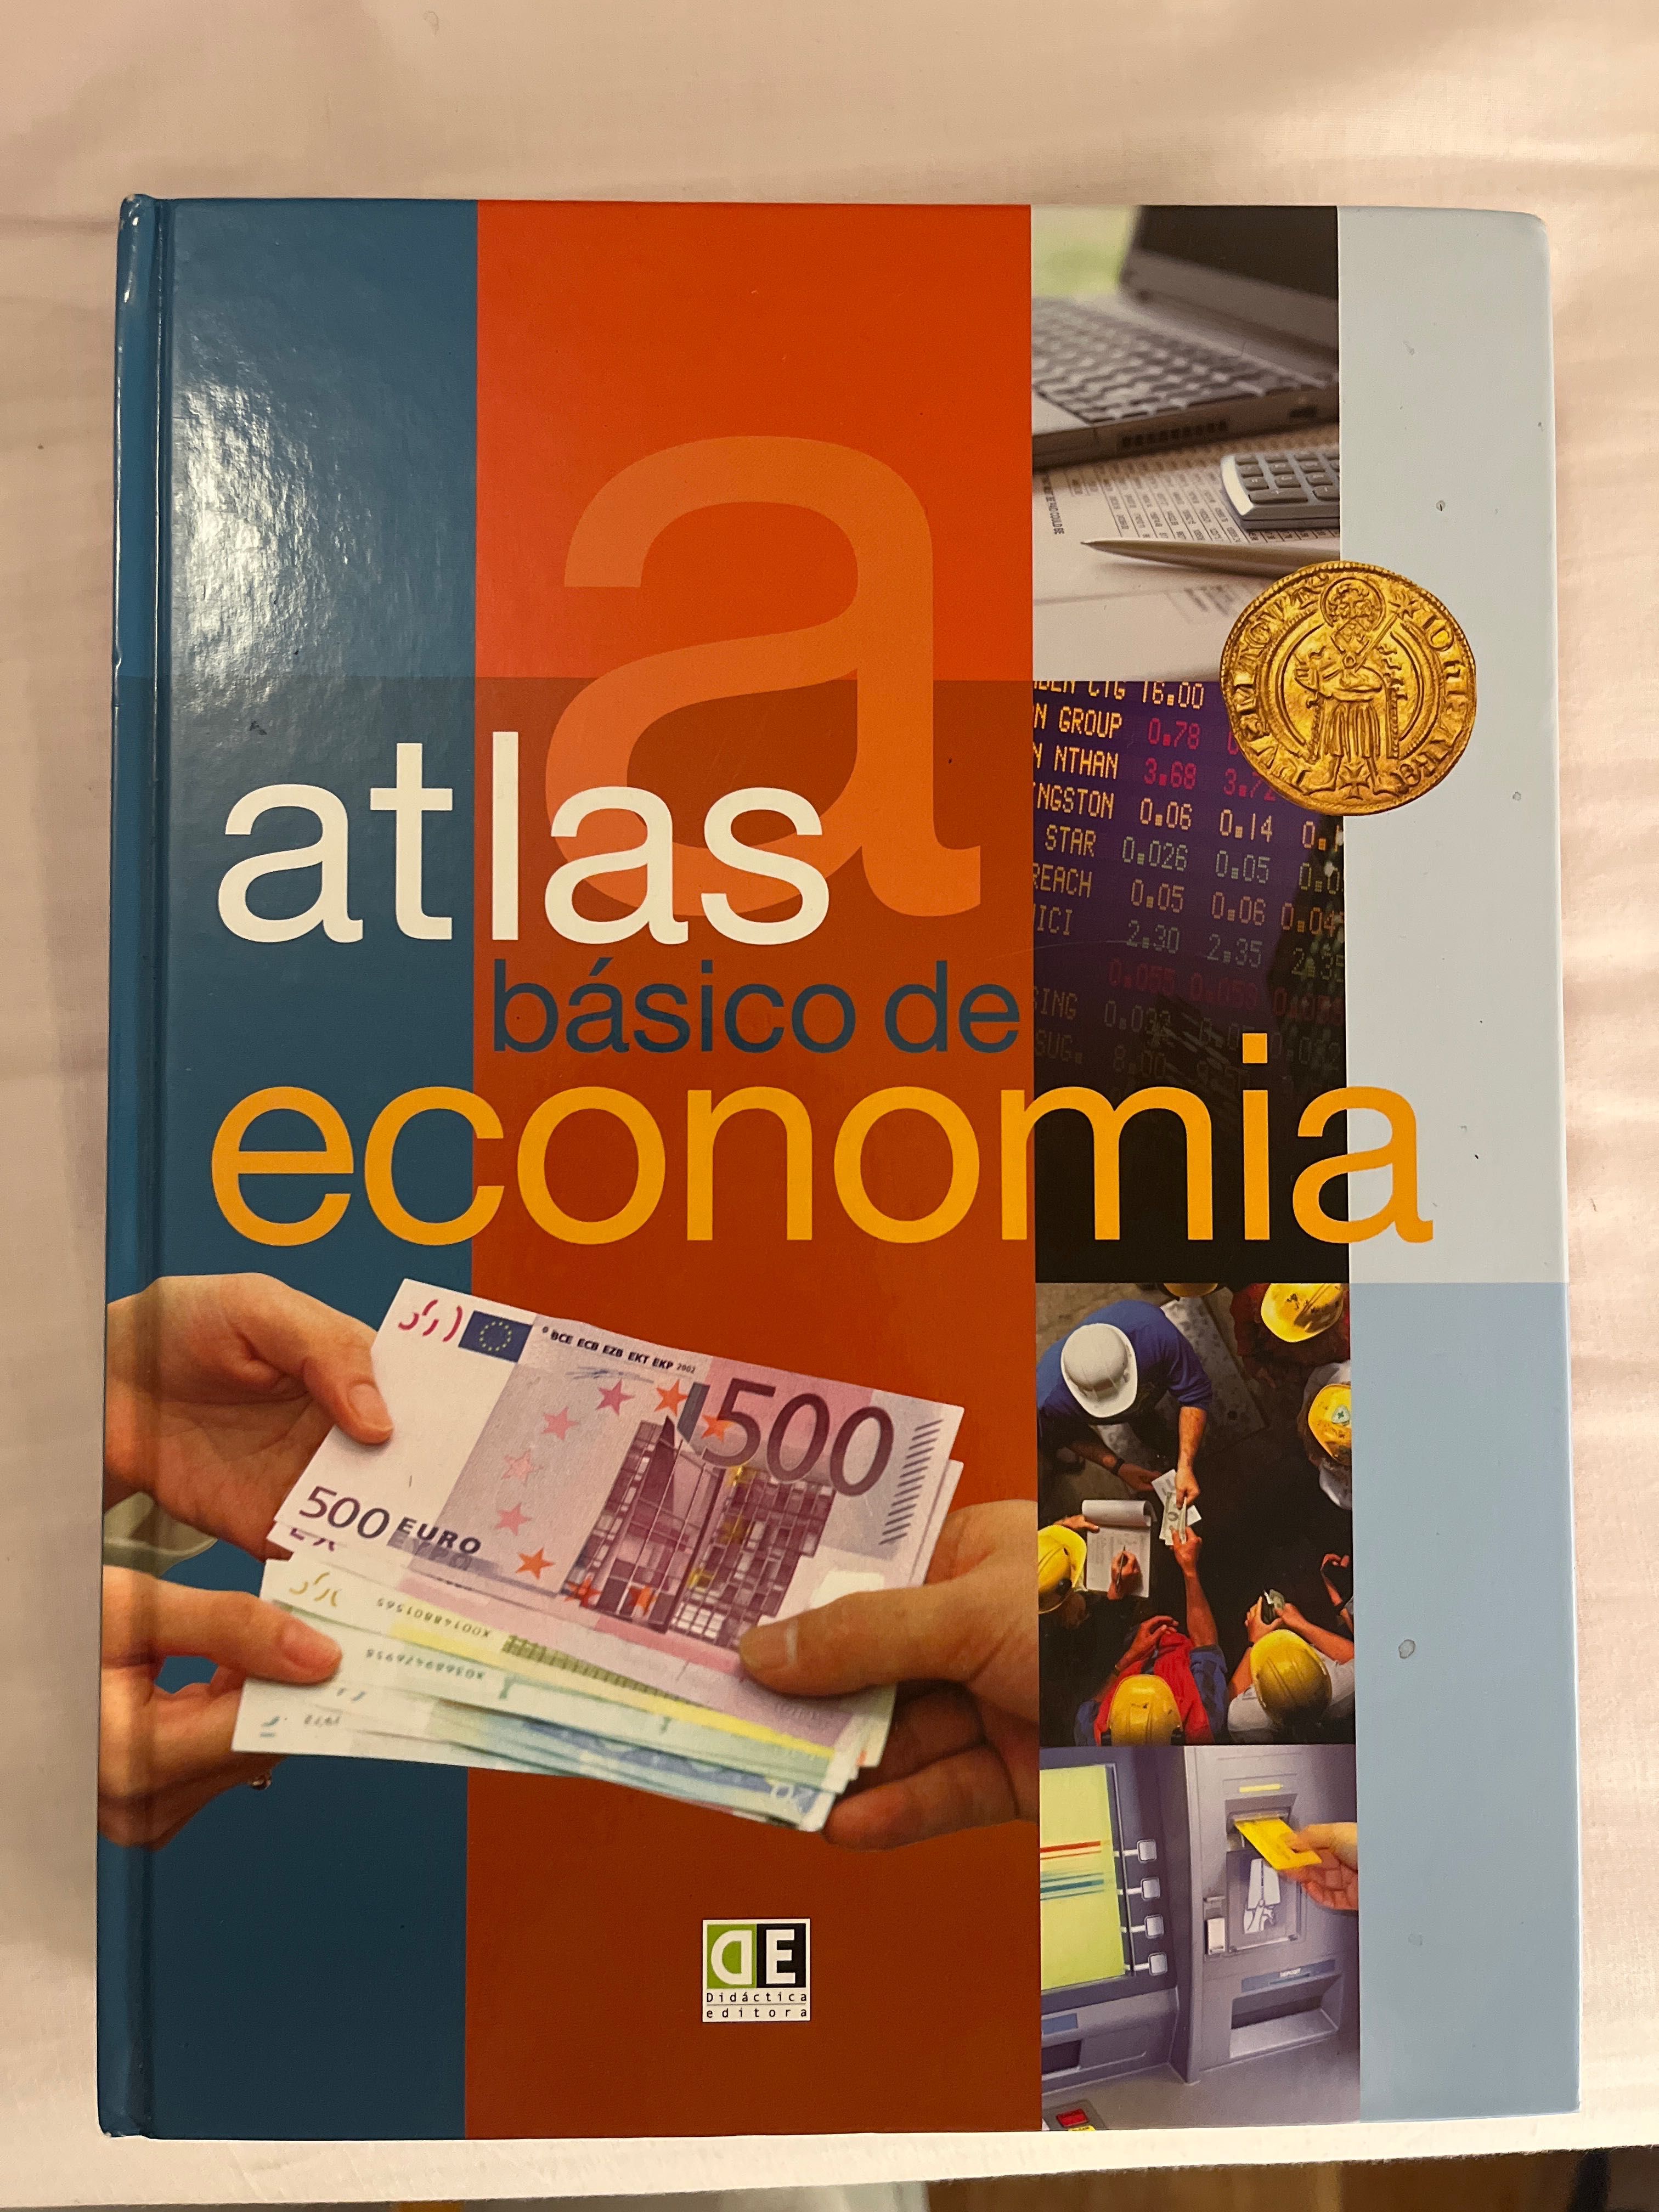 Atlas básico - economia, fisiologia e biologia